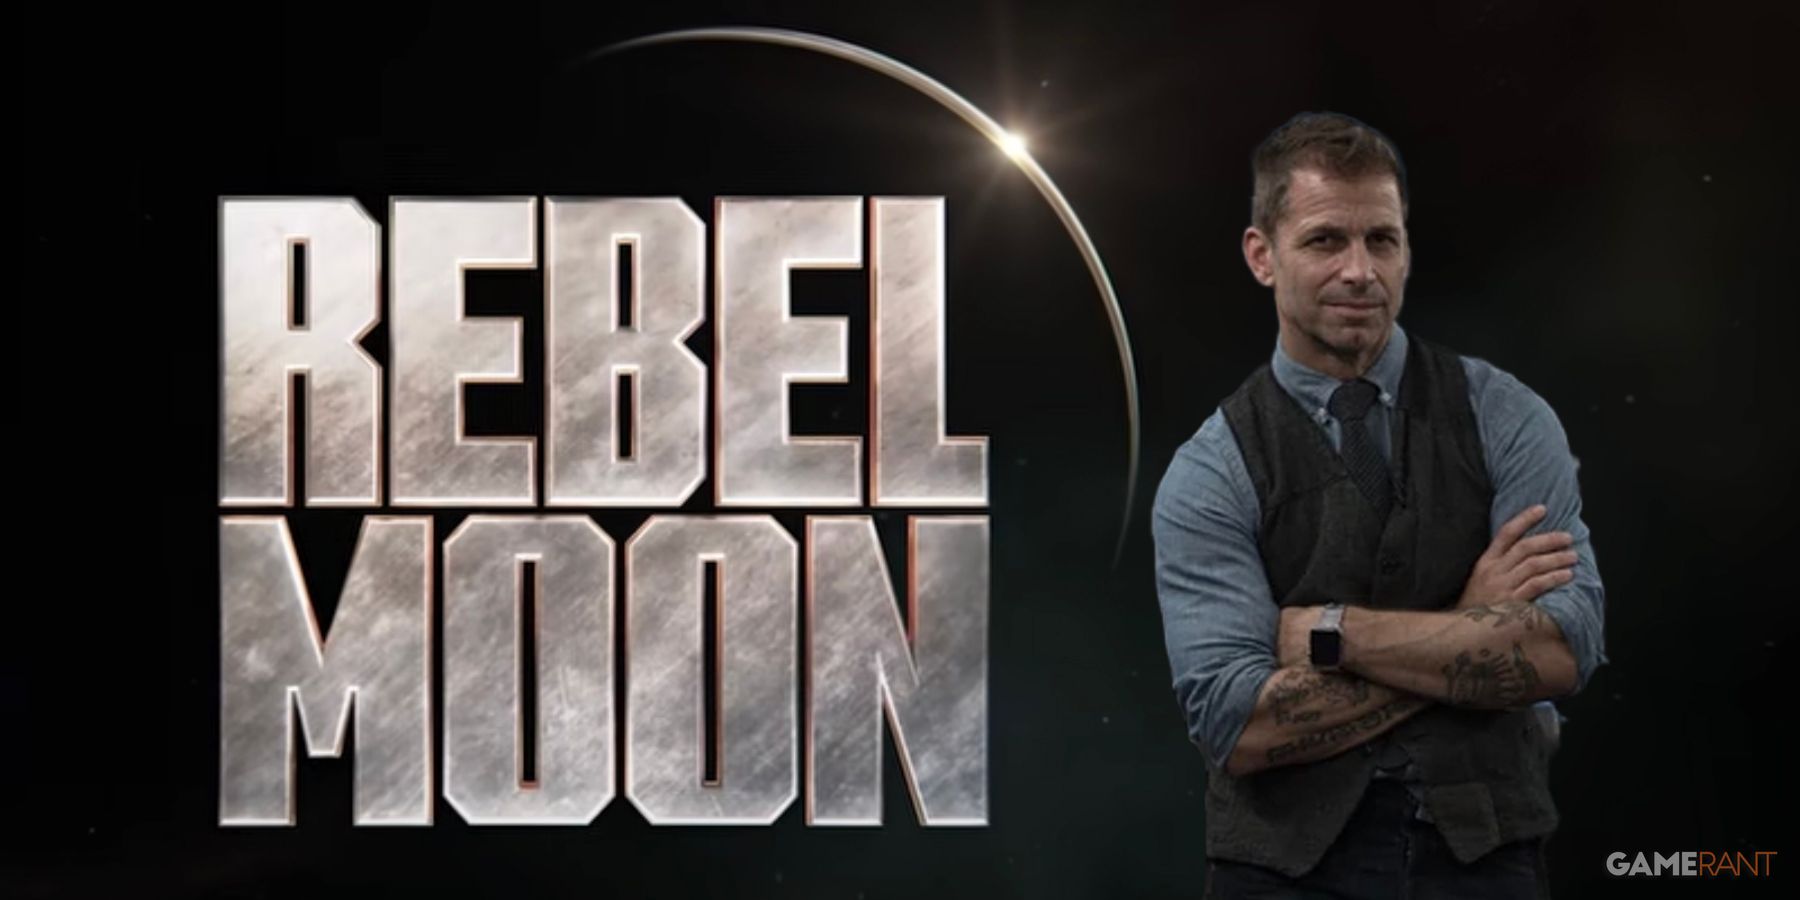 Rebel Moon: Filme de Zack Snyder na Netflix terá série animada e podcast